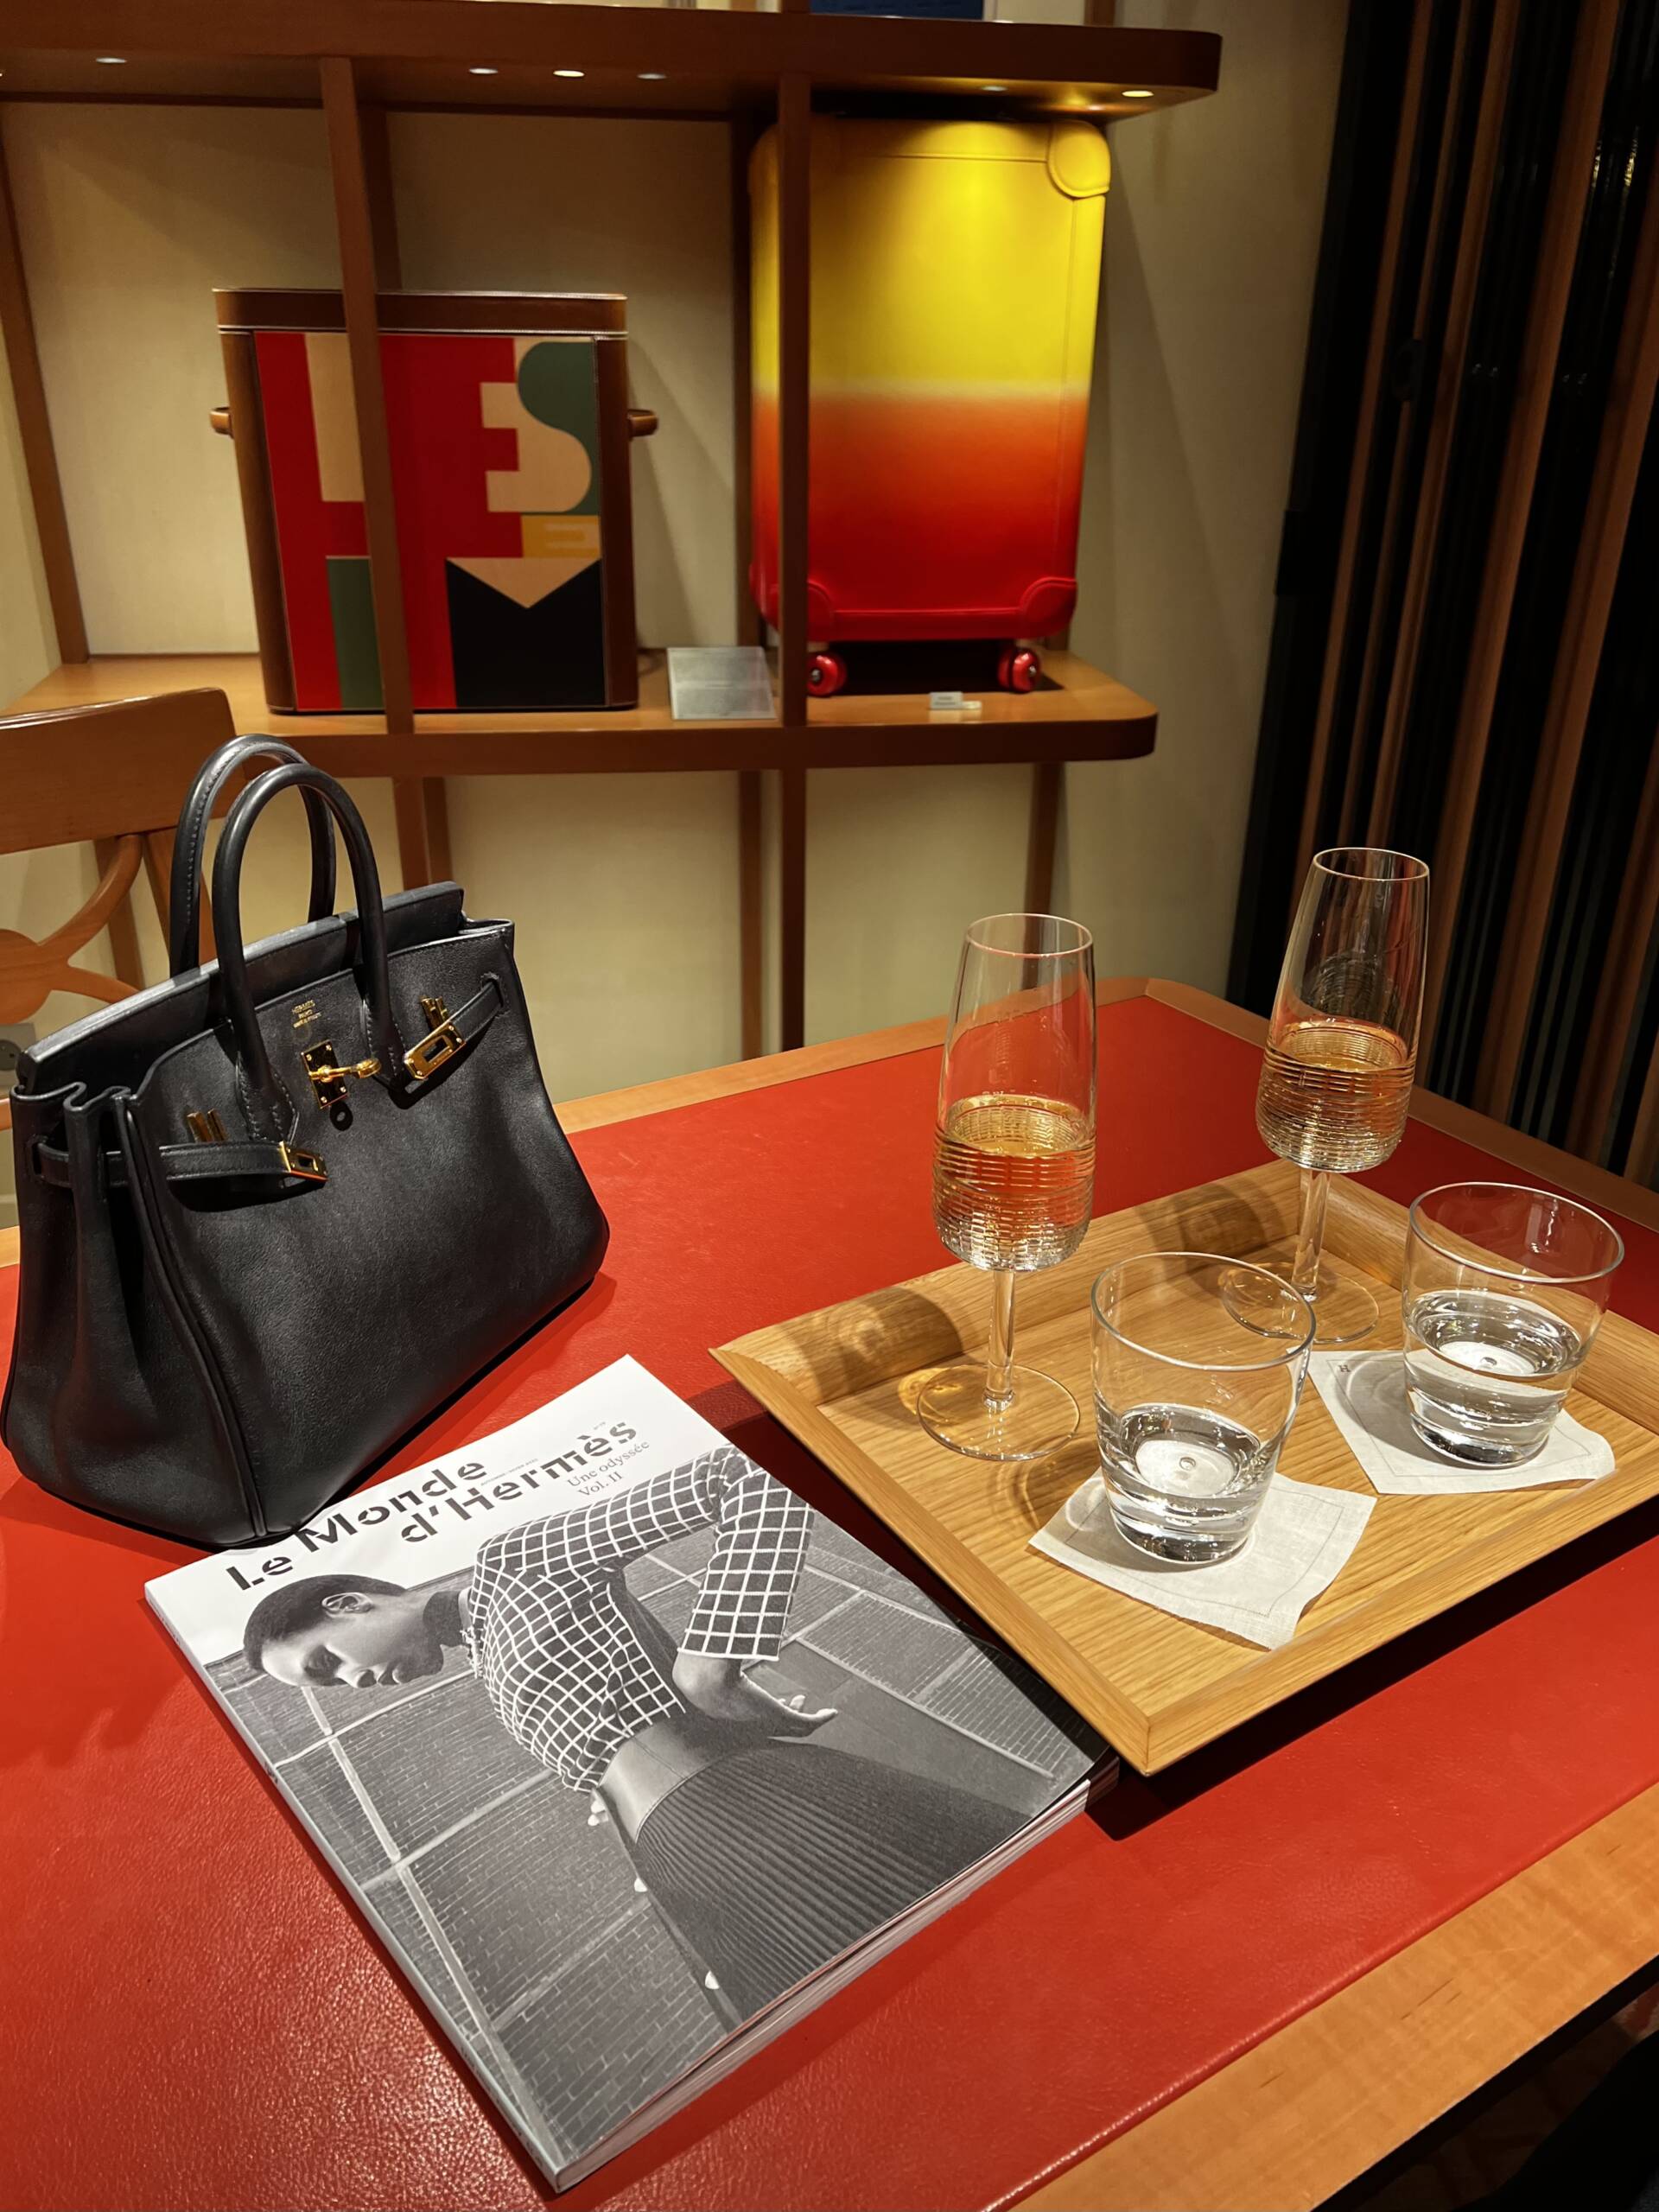 Double Louis Vuitton Handbag Reveal! *UNICORN BAG* 